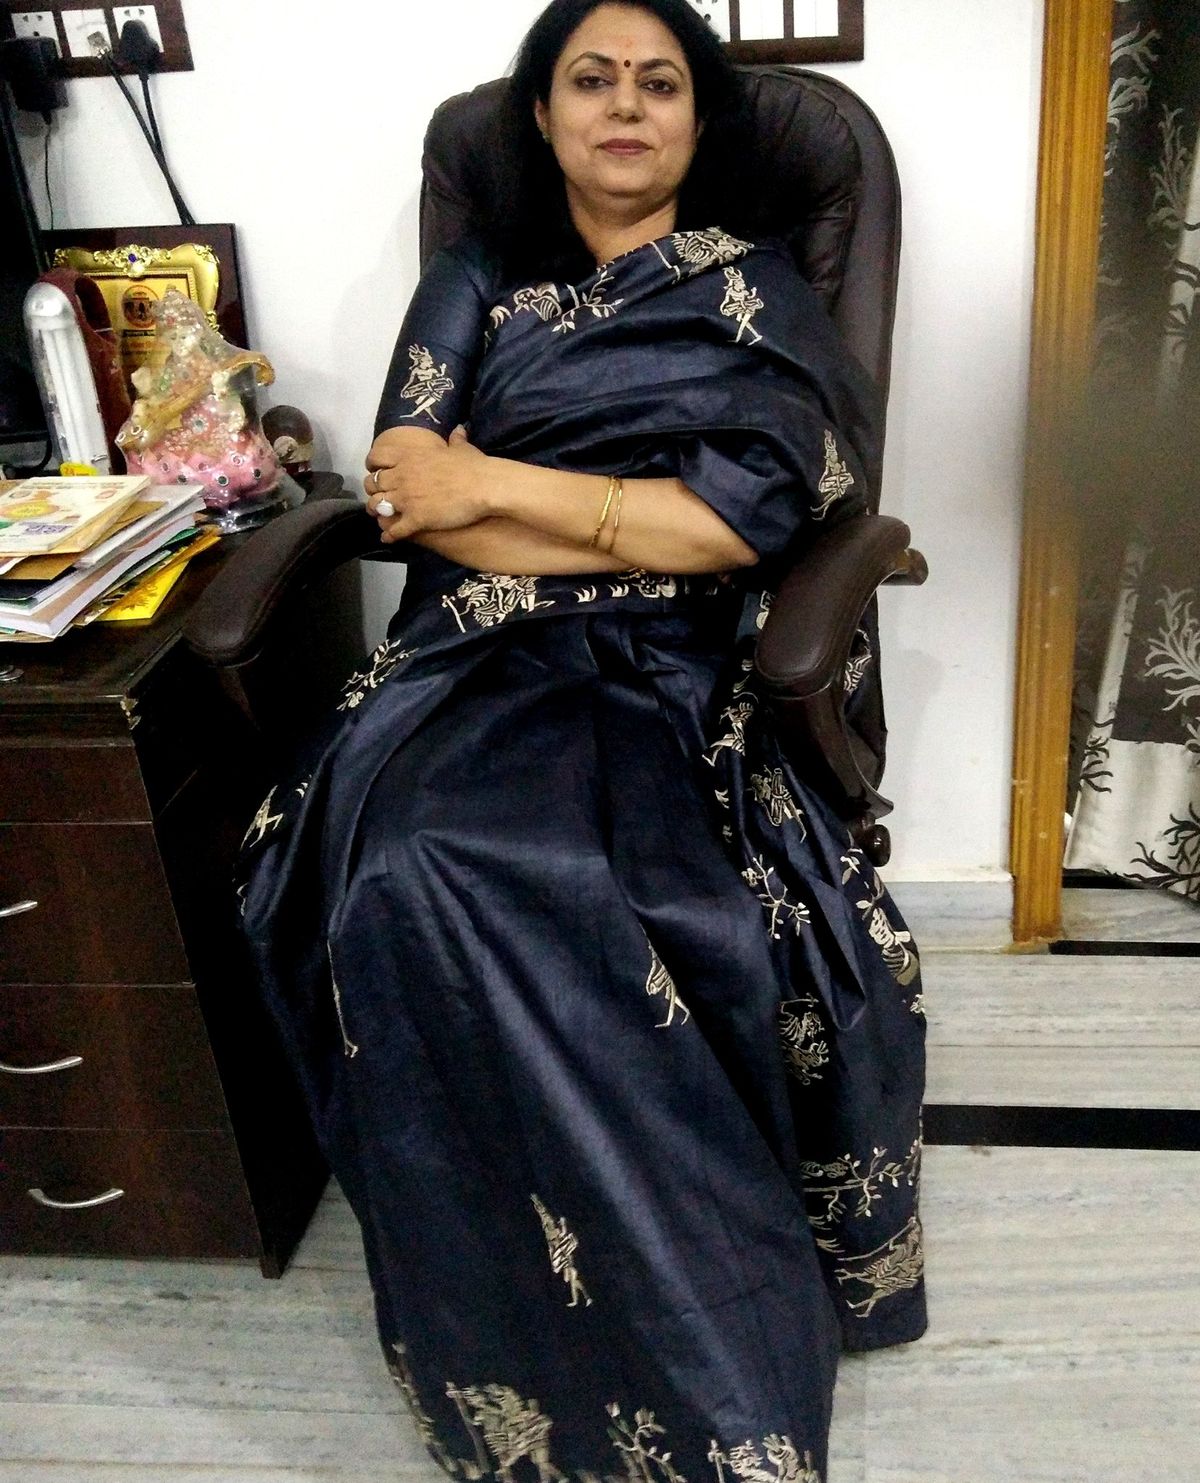 Rashmi Tyagi